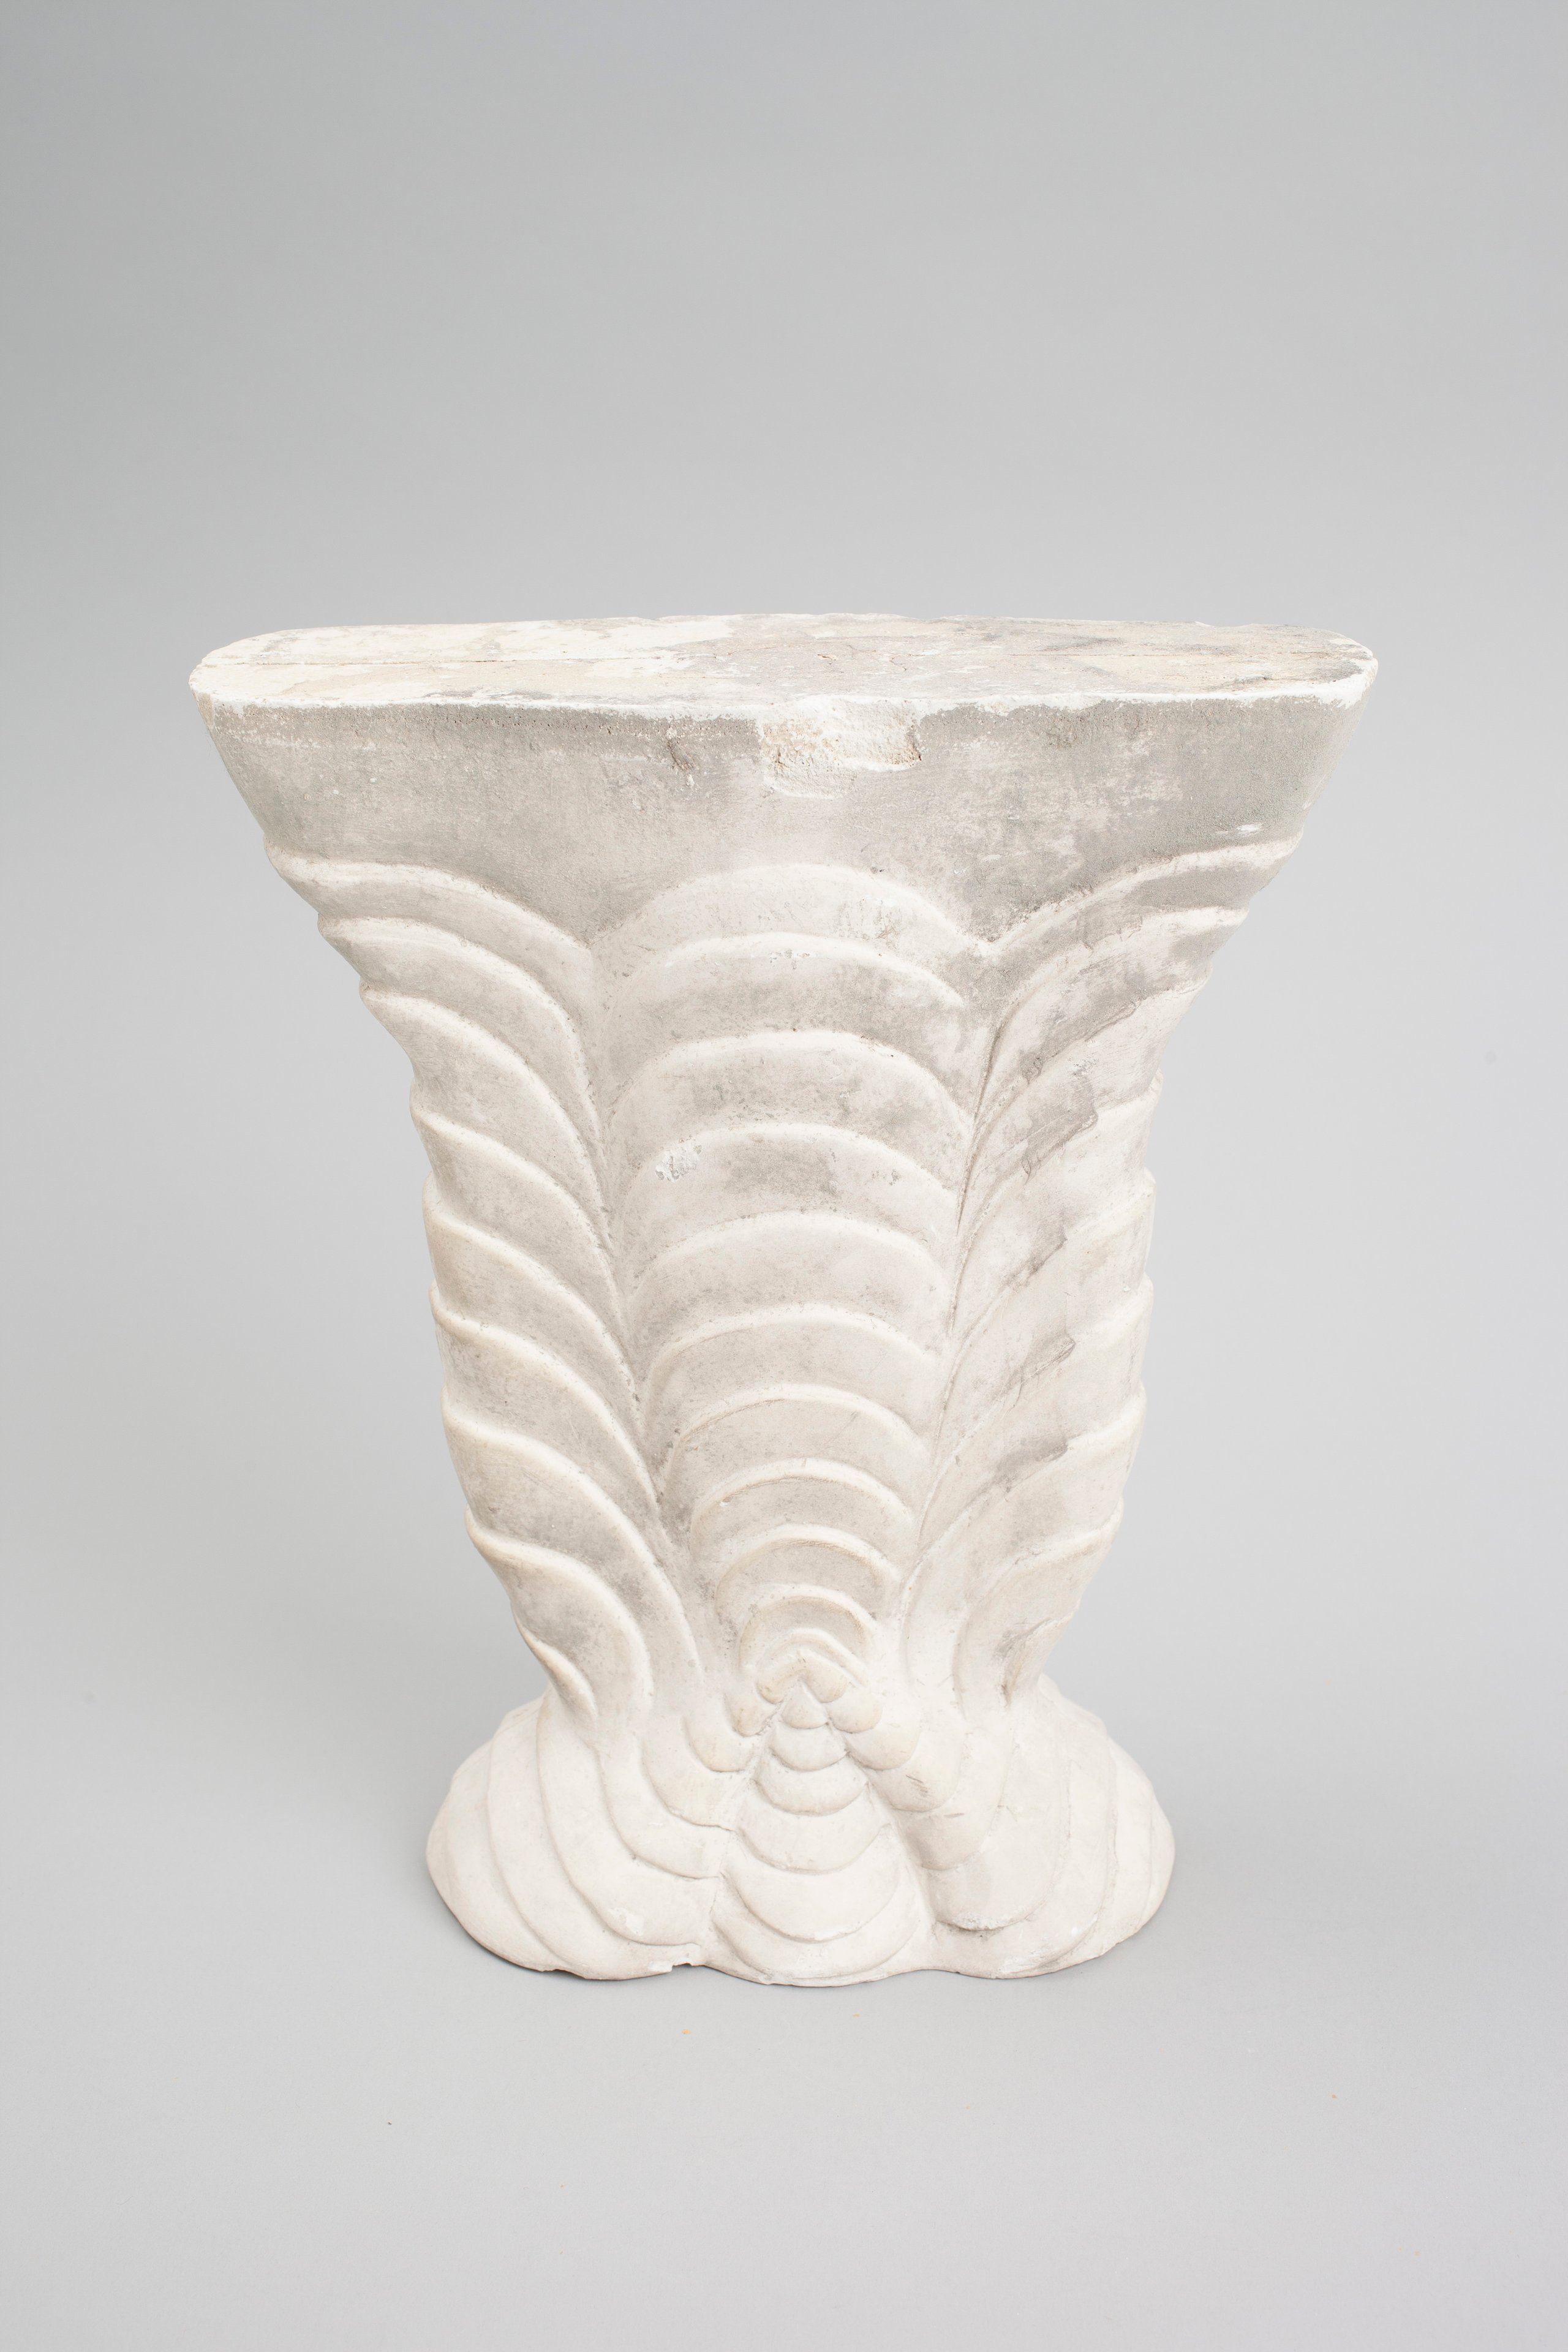 Plaster model vase, made by Pates Potteries Pty Ltd